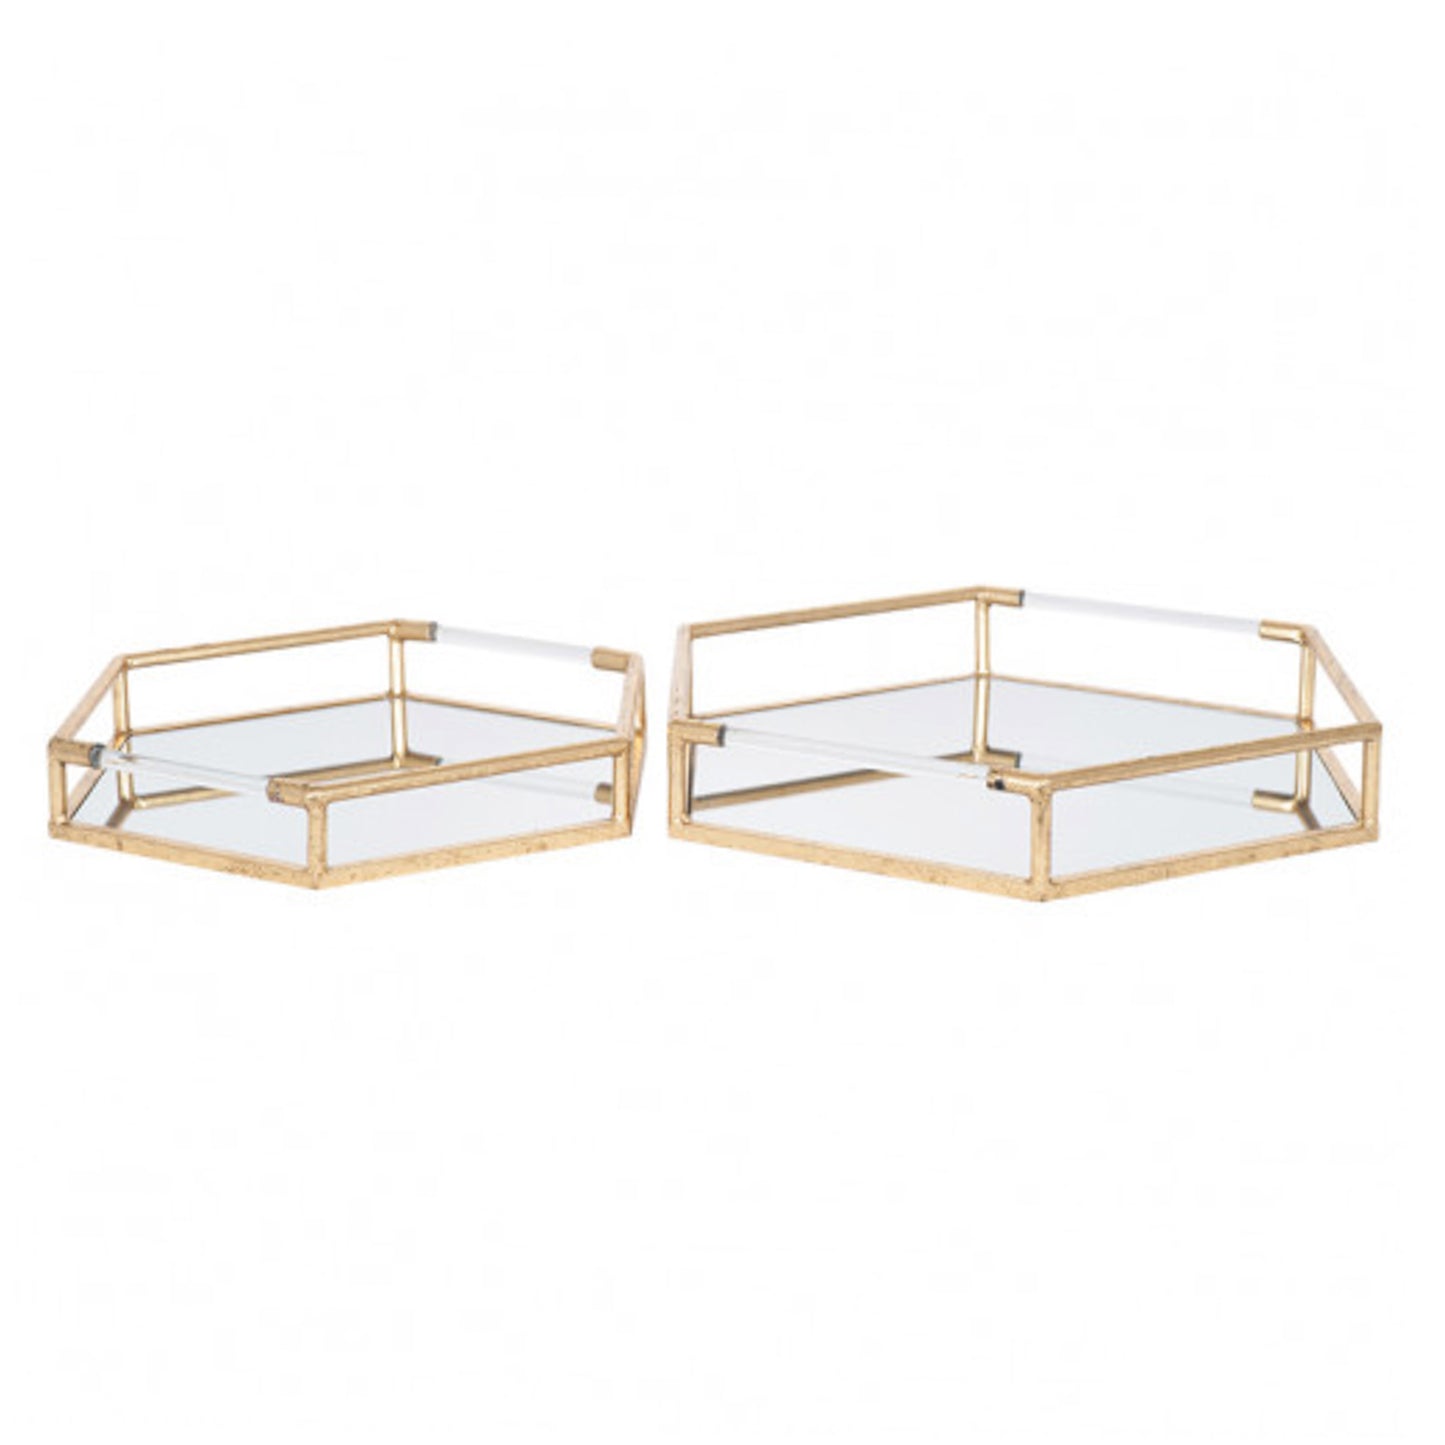 2 Gold Mirror Trays